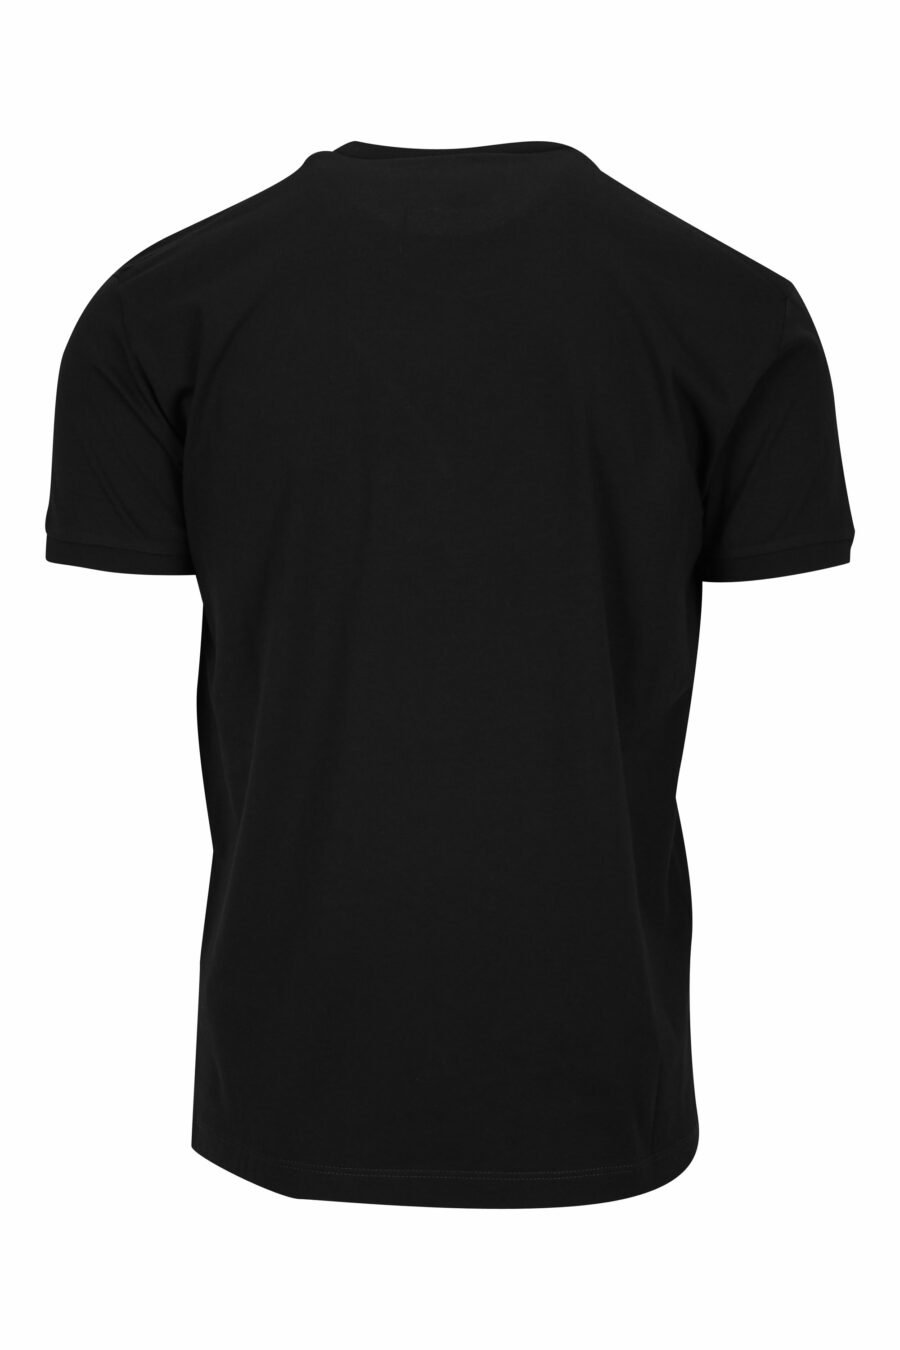 Schwarzes T-Shirt mit weißem Graffiti-Maxilogo - 8054148572105 1